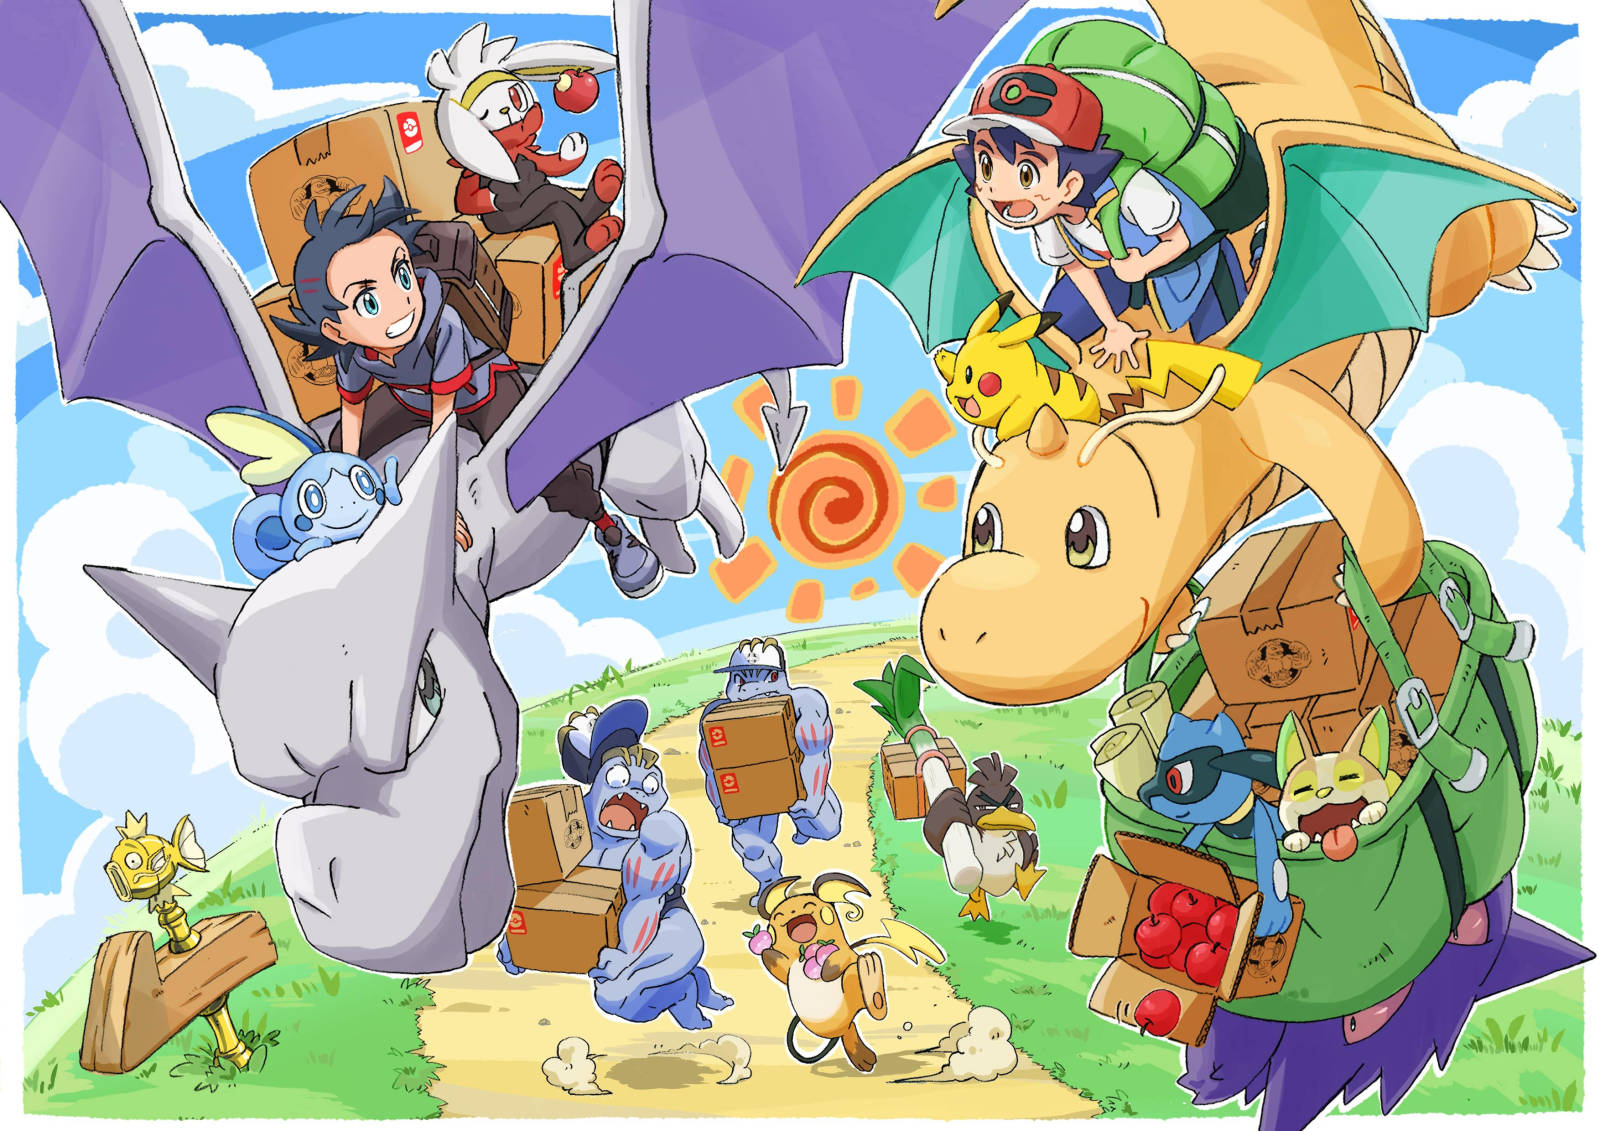 Pokemon Journeys - Original image